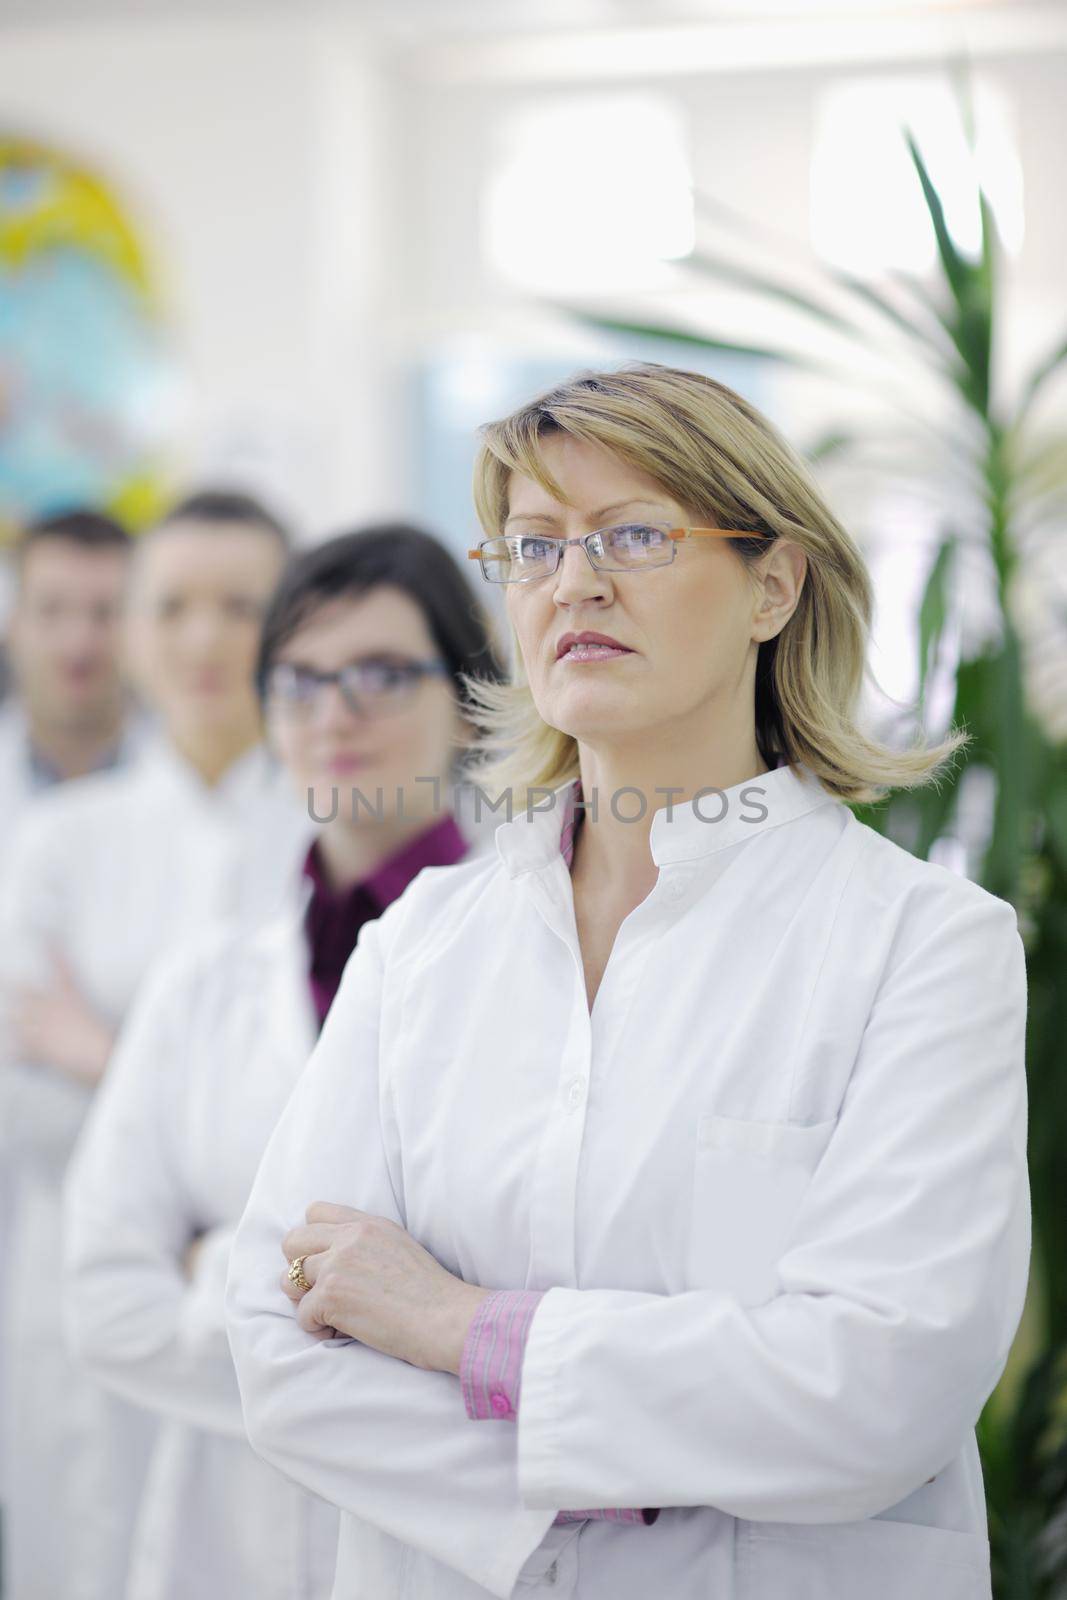 team of  pharmacist chemist woman and man  group  standing in pharmacy drugstore